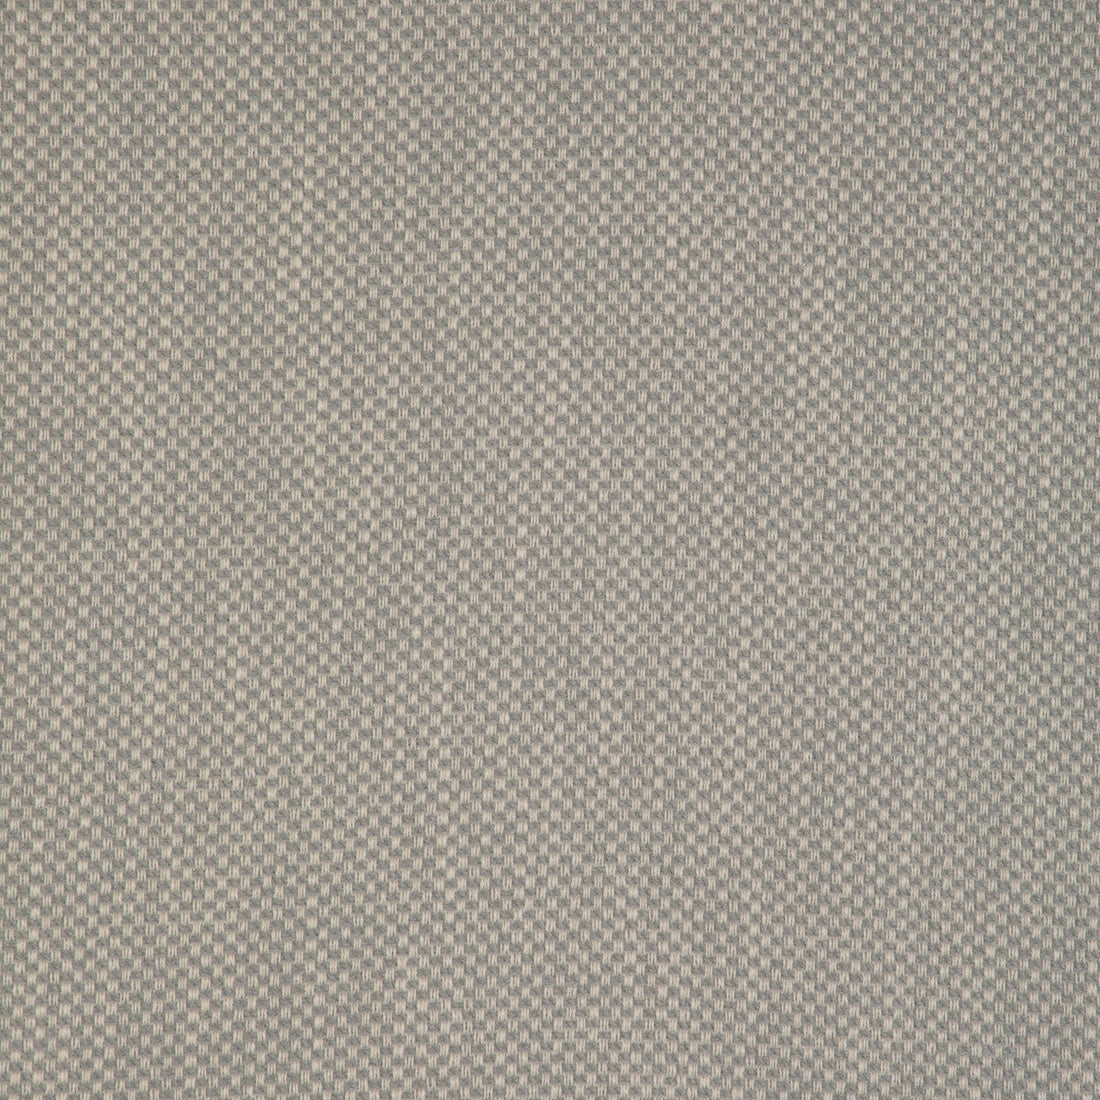 Kravet Smart fabric in 36999-11 color - pattern 36999.11.0 - by Kravet Smart in the Pavilion collection